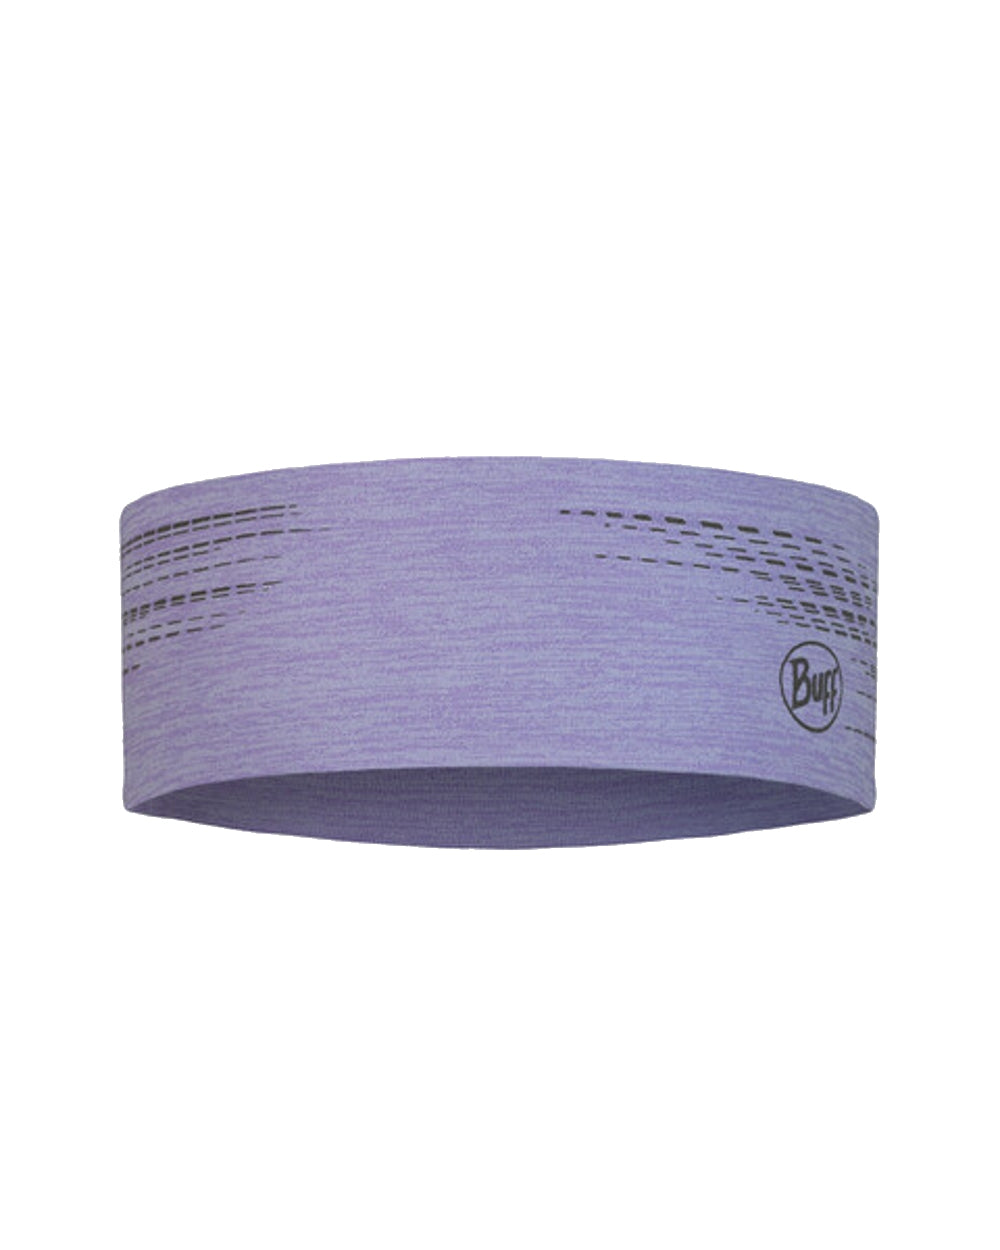 Buff DryFlx Headband in Lavender 